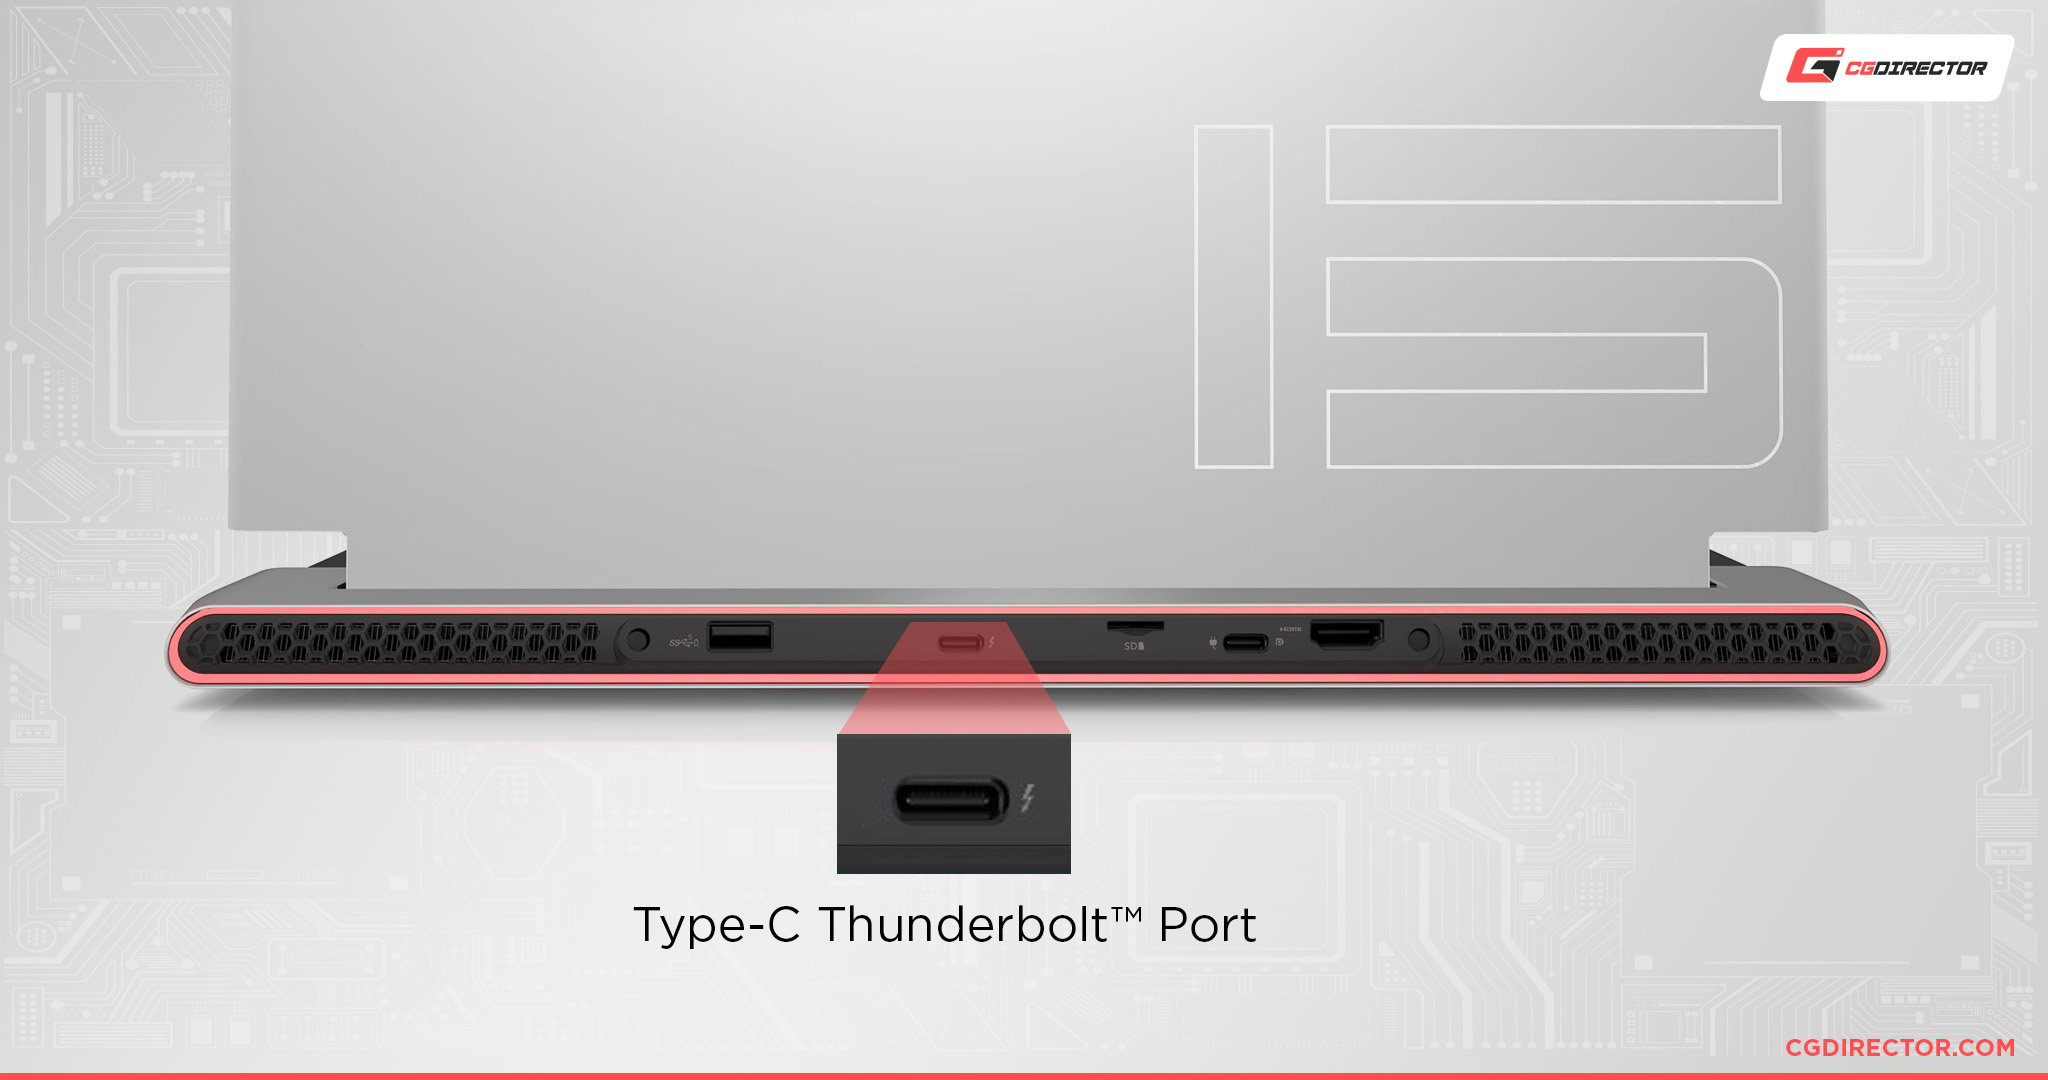 Type-C Thunderbolt Port